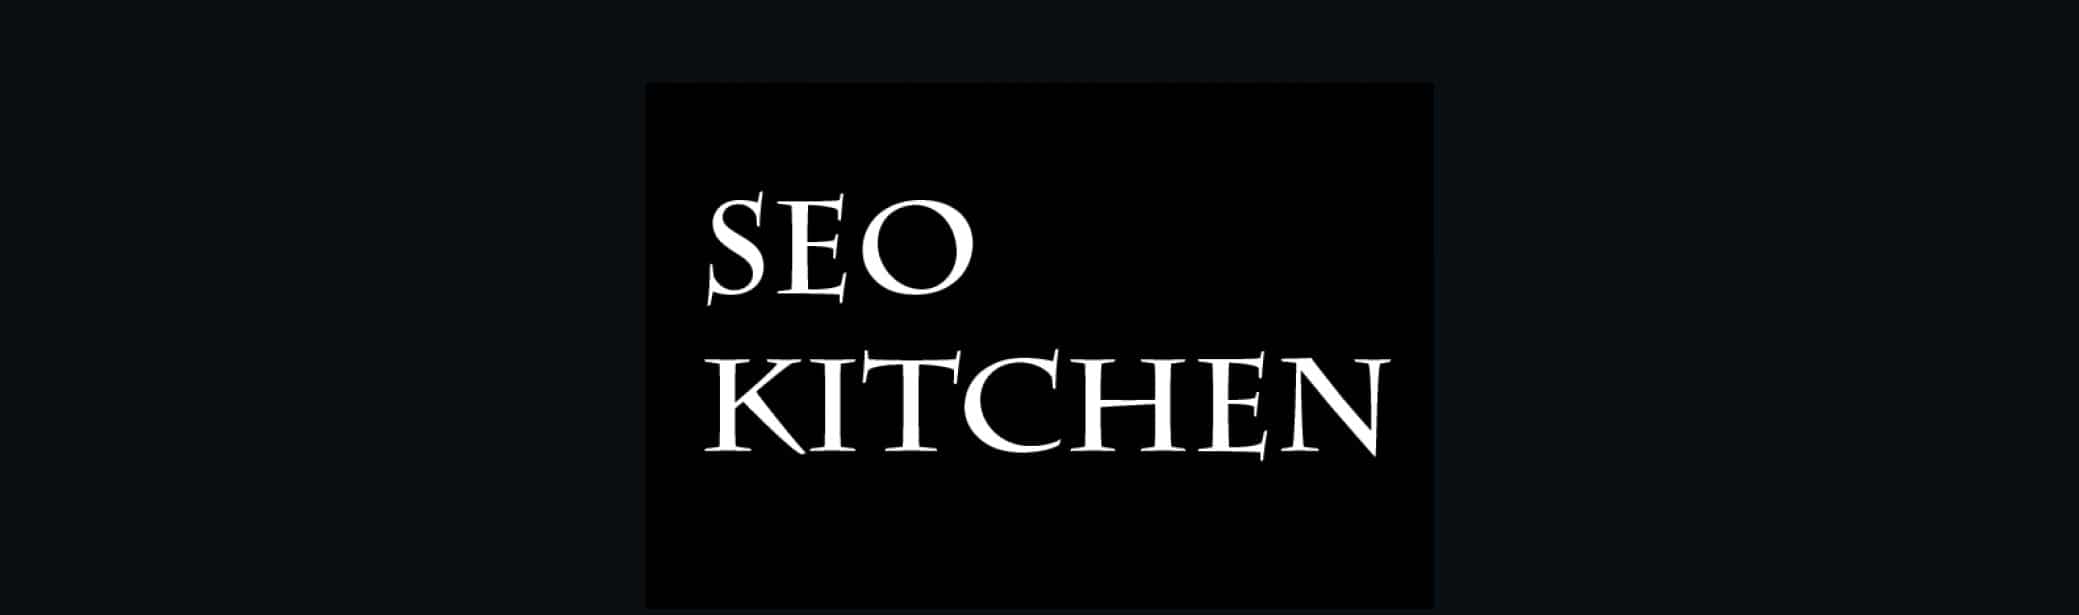 The text "SEO kitchen"